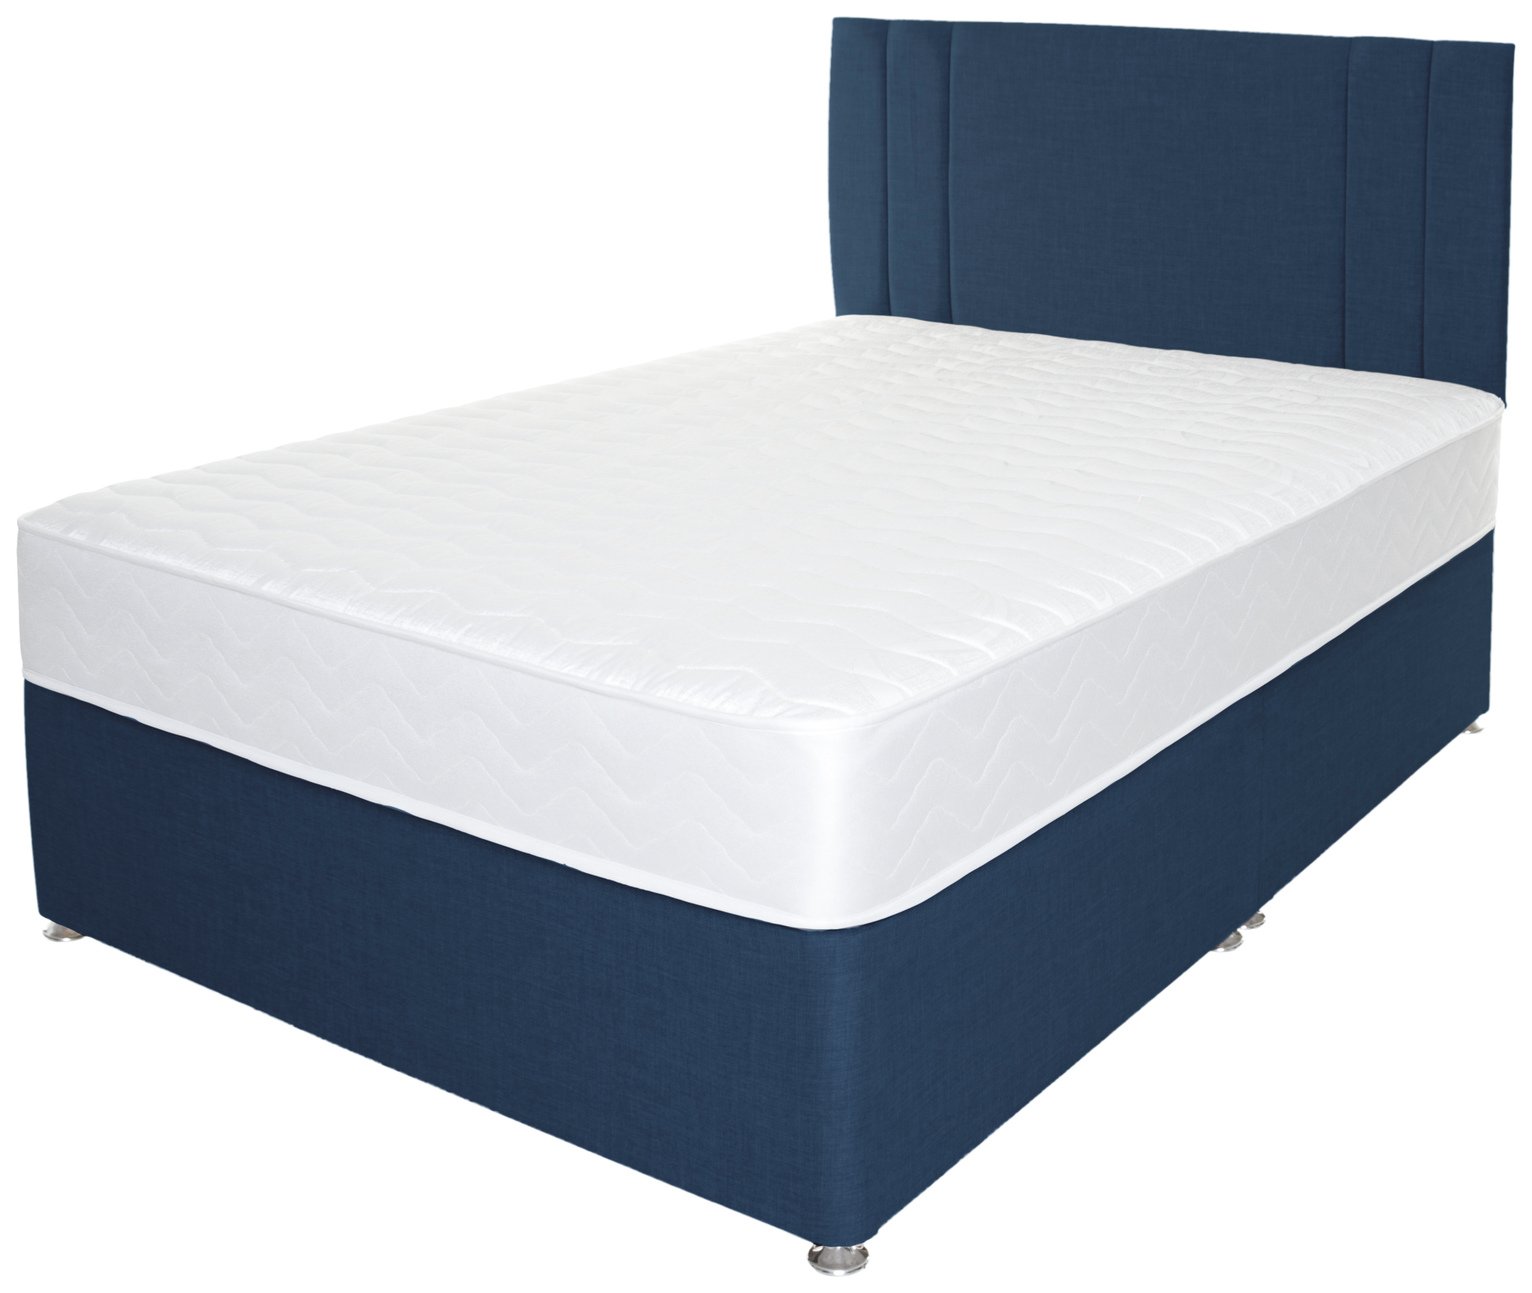 Airpsrung Henlow 1200 Memory Divan Bed and Headboard - Blue at Argos